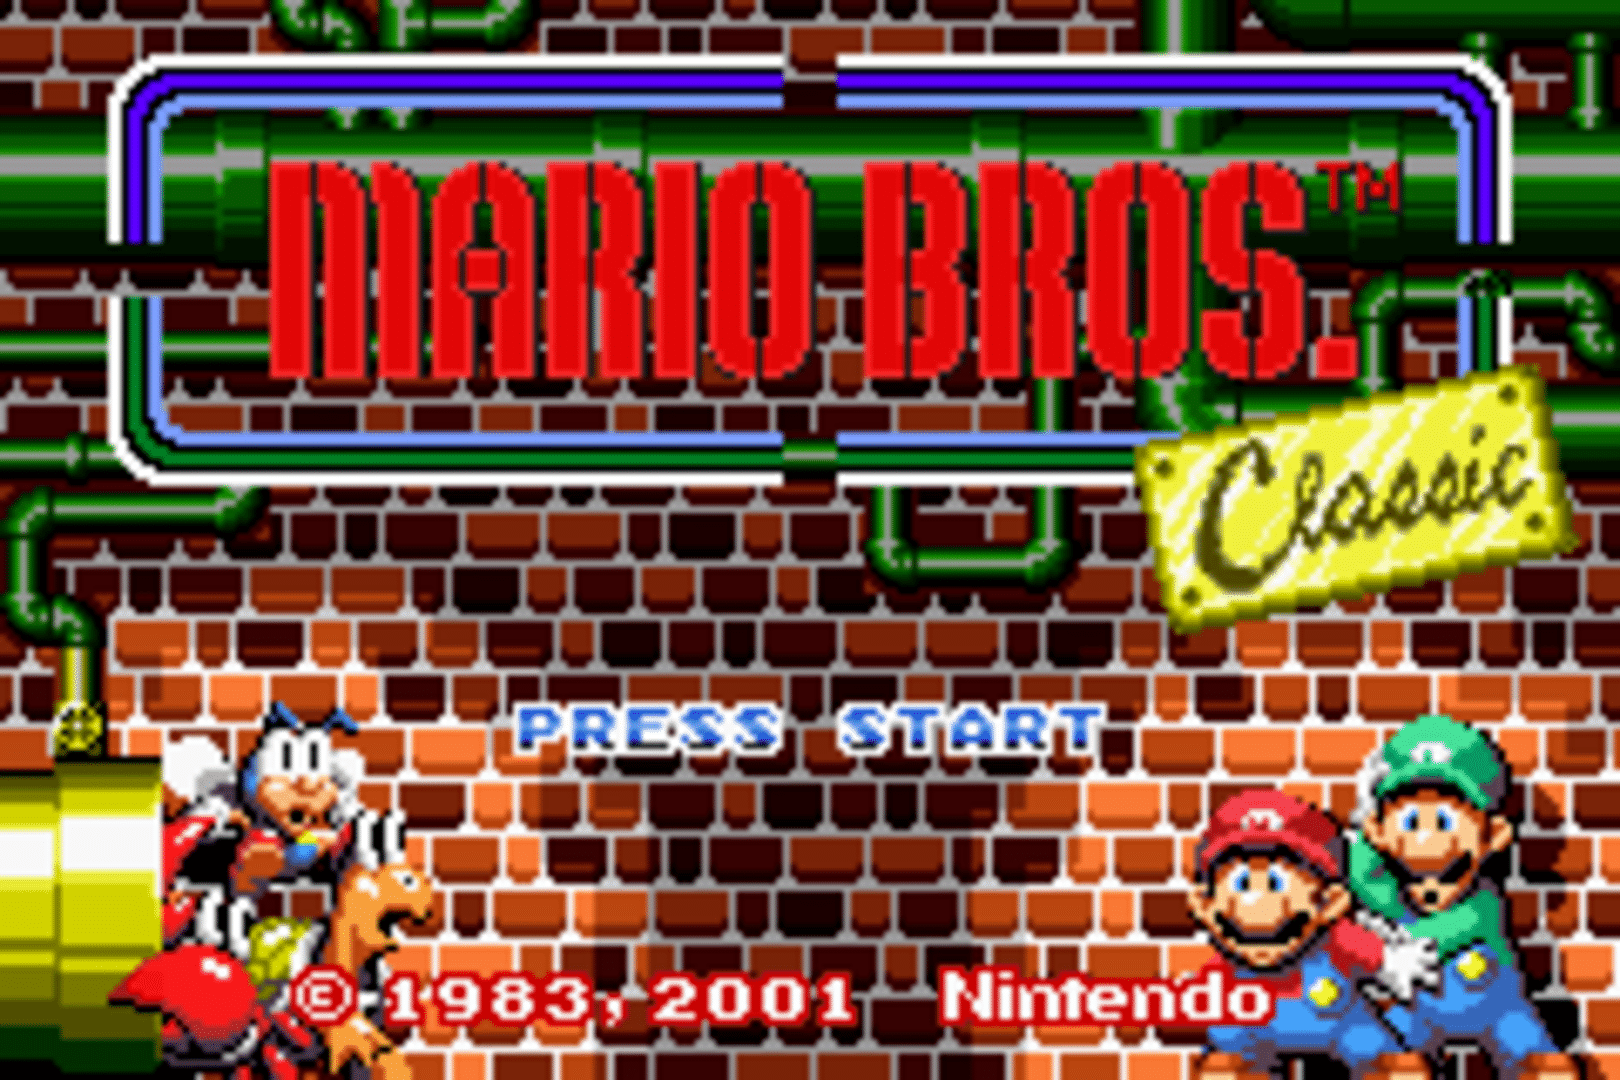 Mario Bros. screenshot